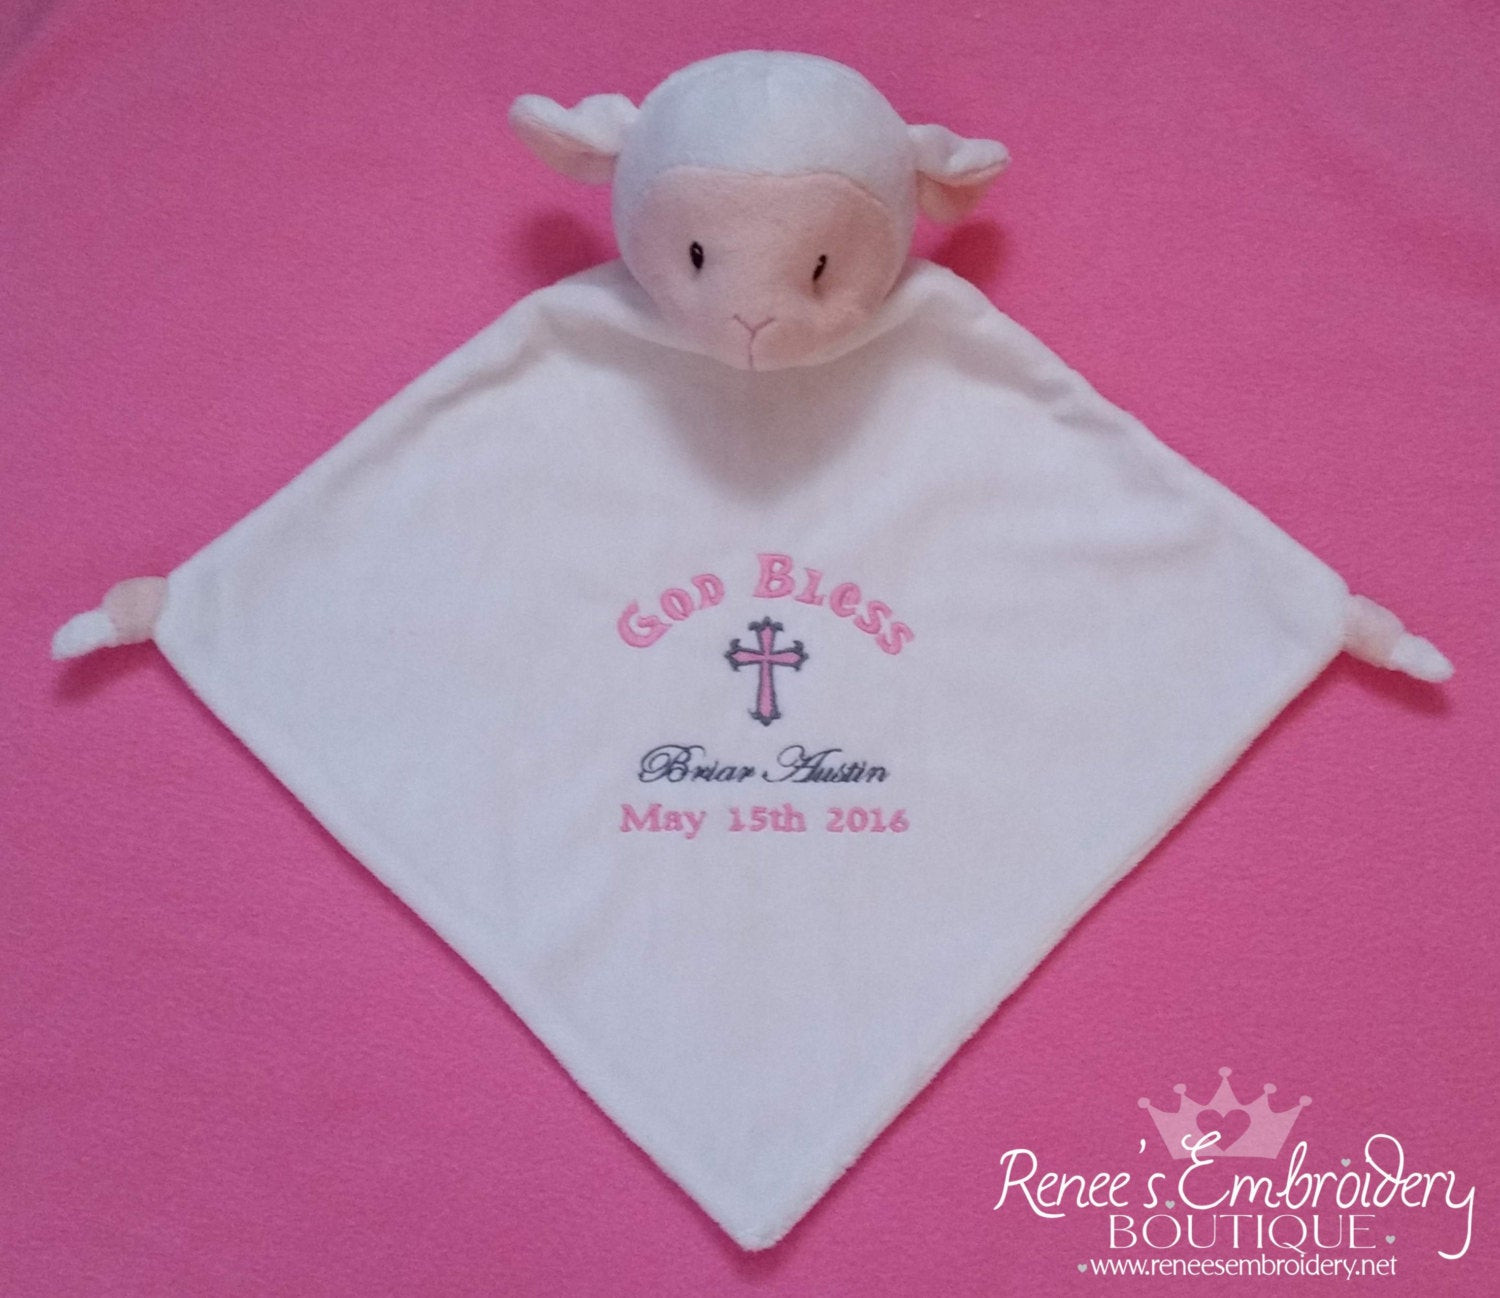 Personalized Baby Gift Etsy
 Personalized Baby Girl Baptismal Gift Baptism Baby Blanket